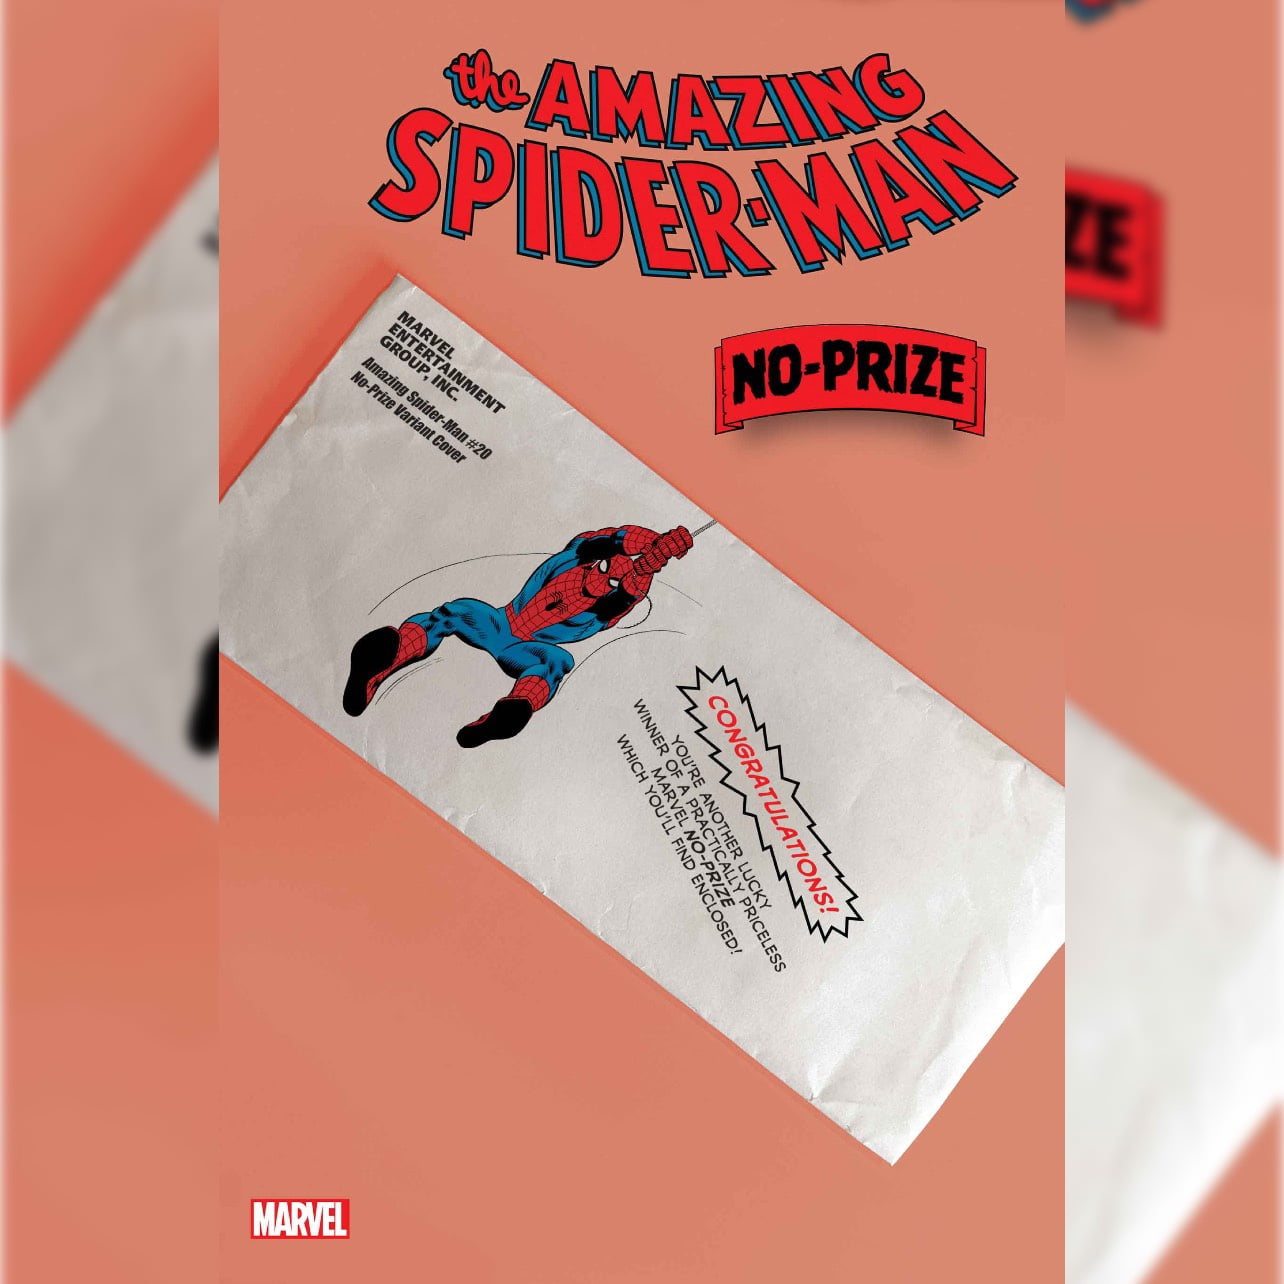 AMAZING SPIDER-MAN #19 NO-PRIZE VARIANT COVER via 360 MAGAZINE